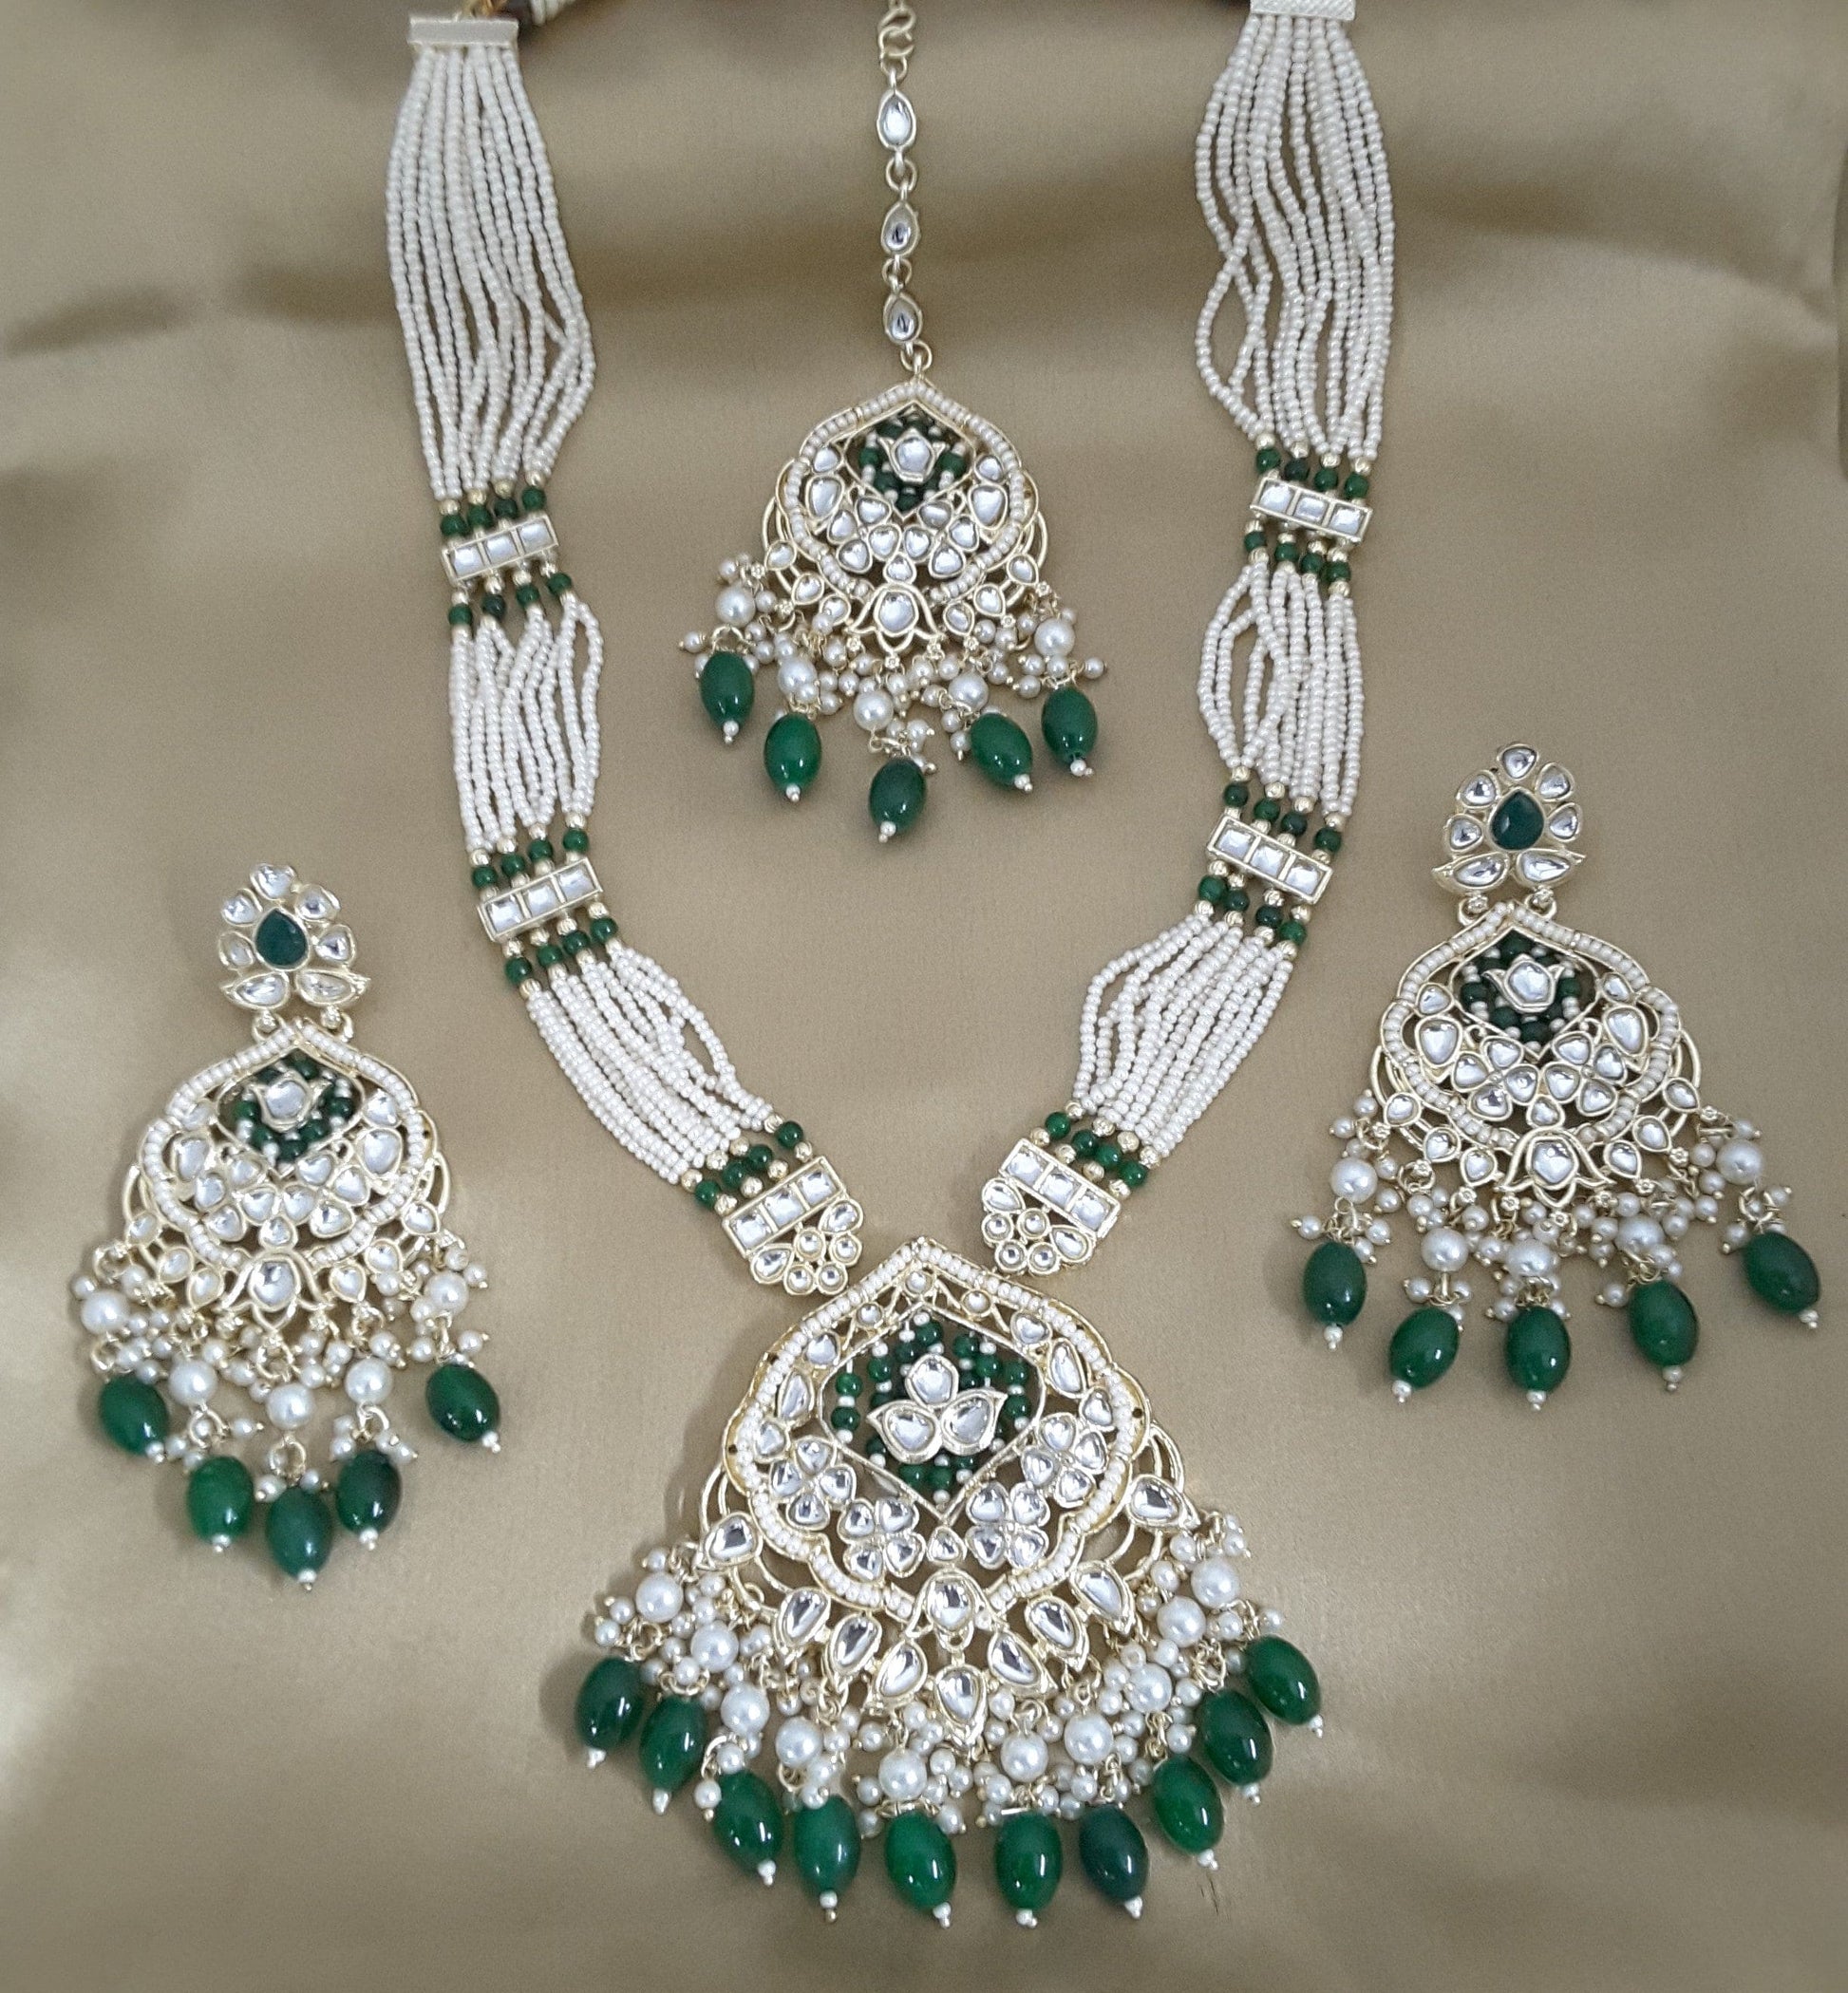 Moonstruck Traditional Indian White Kundan and Emerald Green Beads Long Regal Necklace Earring Set with Maang tikka for Women(Emerald Green) - www.MoonstruckINC.com